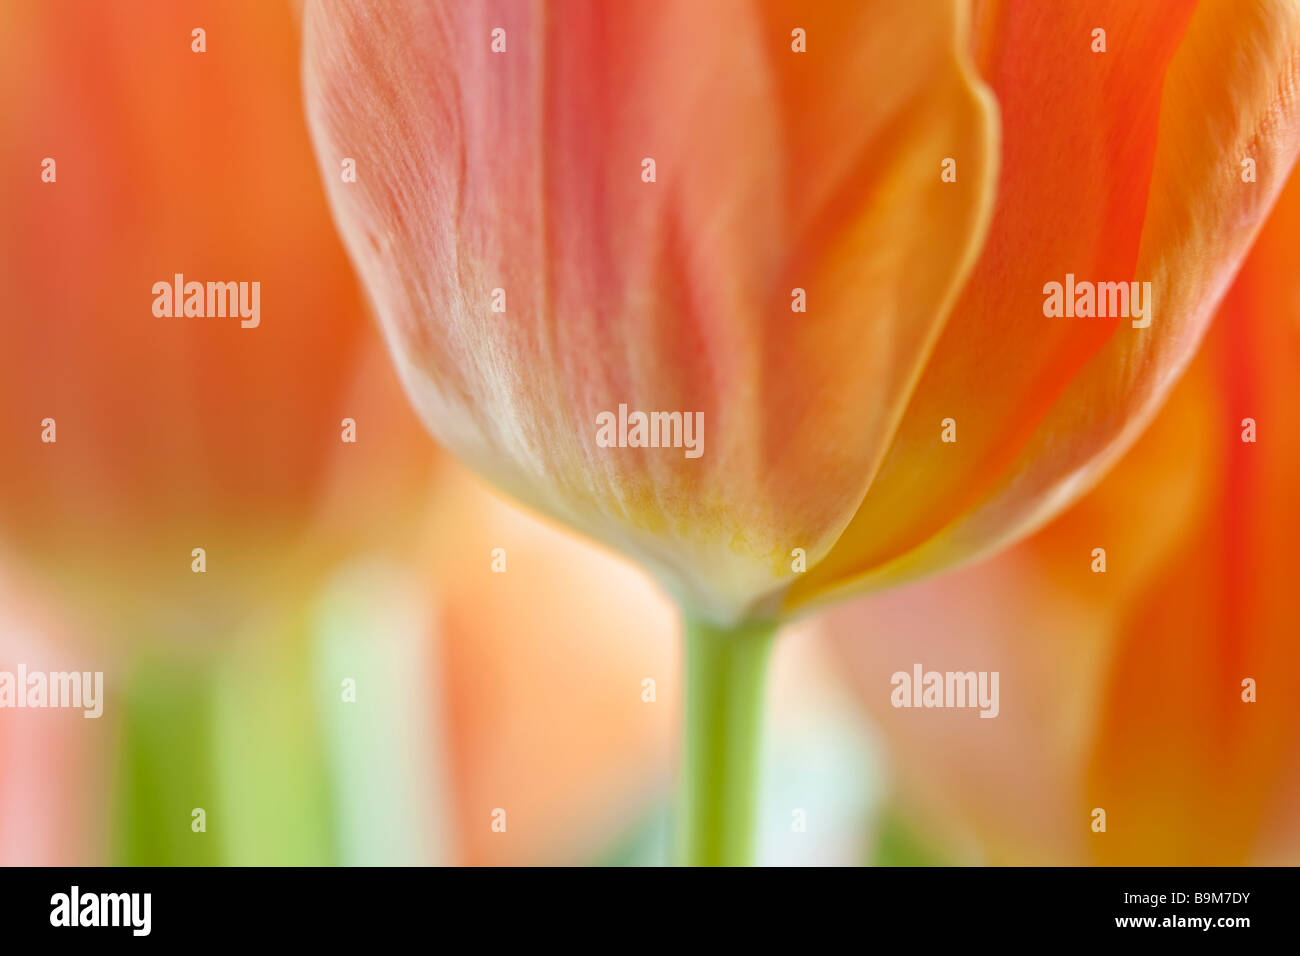 Orange and yellow tulip close-up against white background Stock Photo